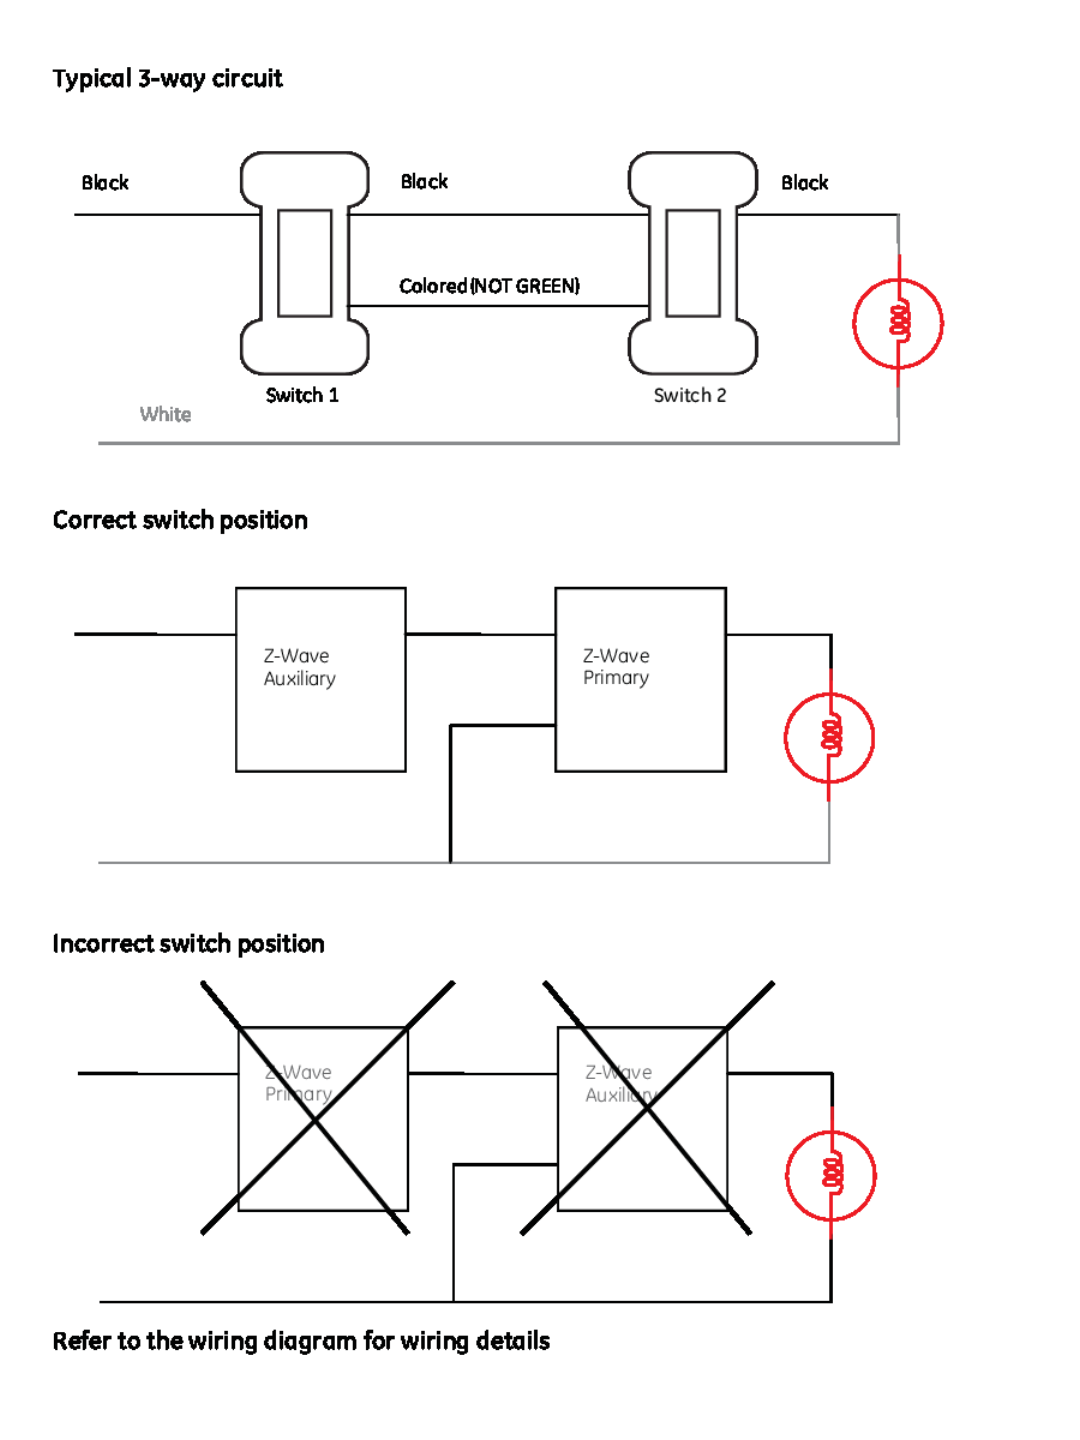 Jasco ZWAVEKIT Typical 3-waycircuit, Correct switch position, Incorrect switch position, Black, ColoredNOT GREEN, Switch 